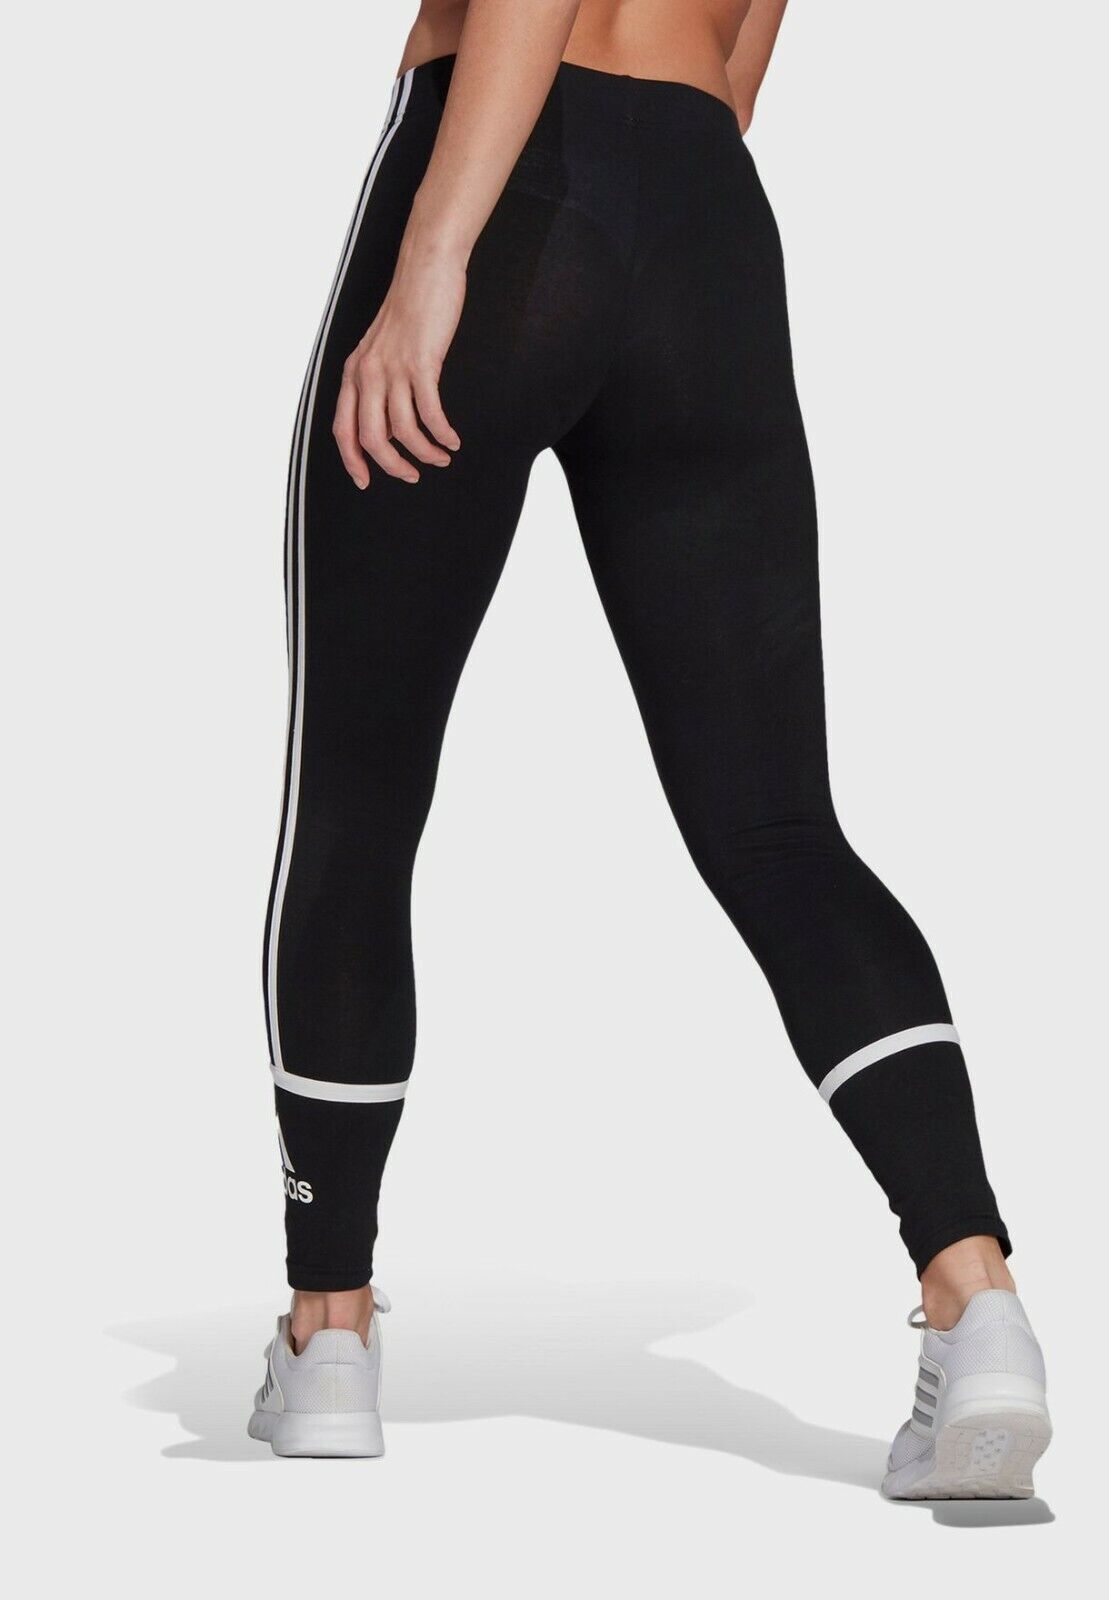 Womens Ladies Adidas Leggings Bottoms Pants - Running Fitness Gym